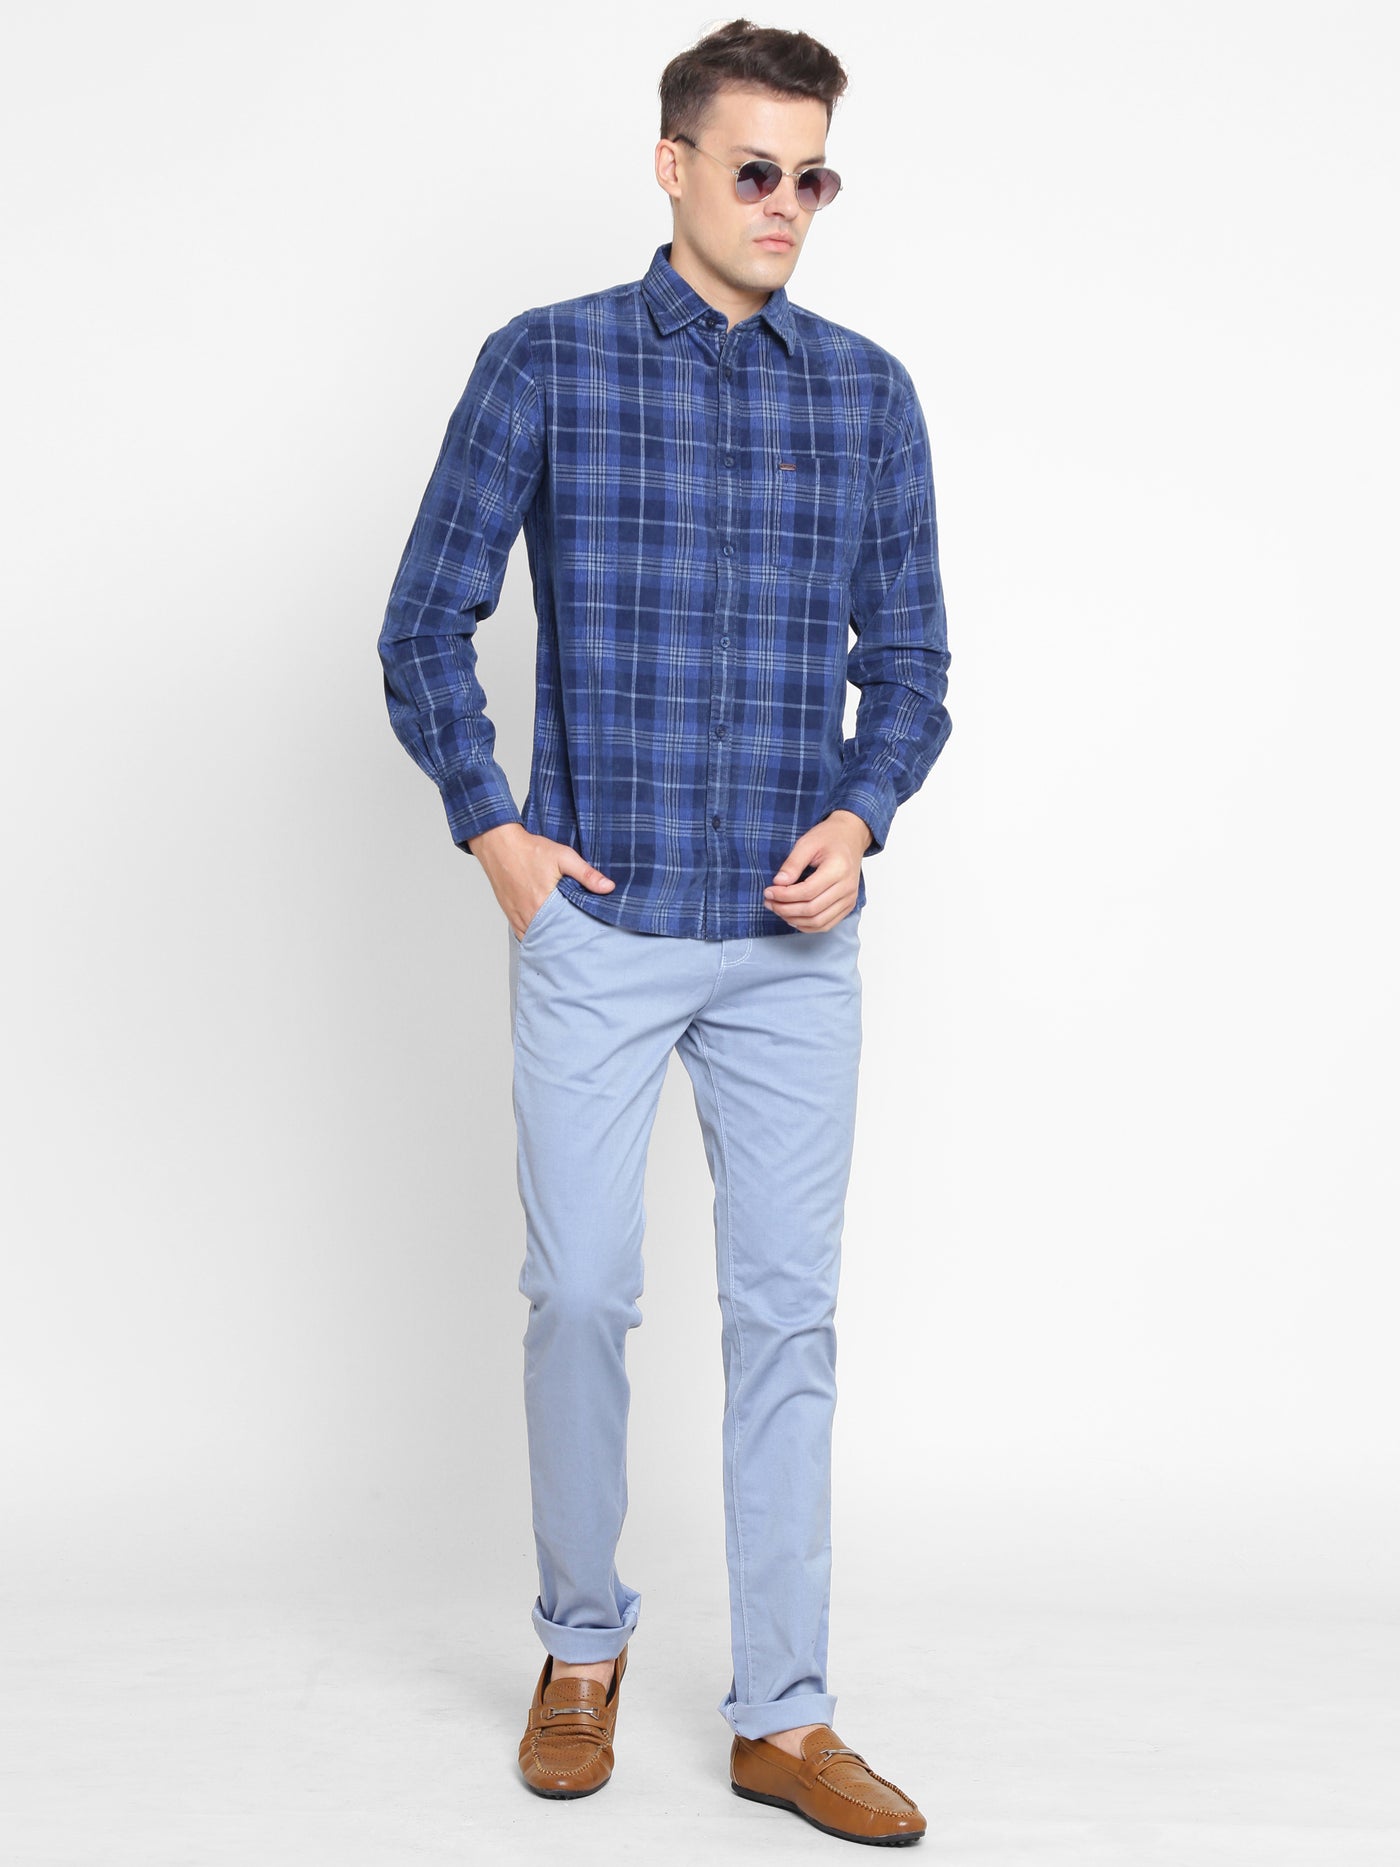 Blue Checked Cotton Slim Fit shirt - Men Shirts